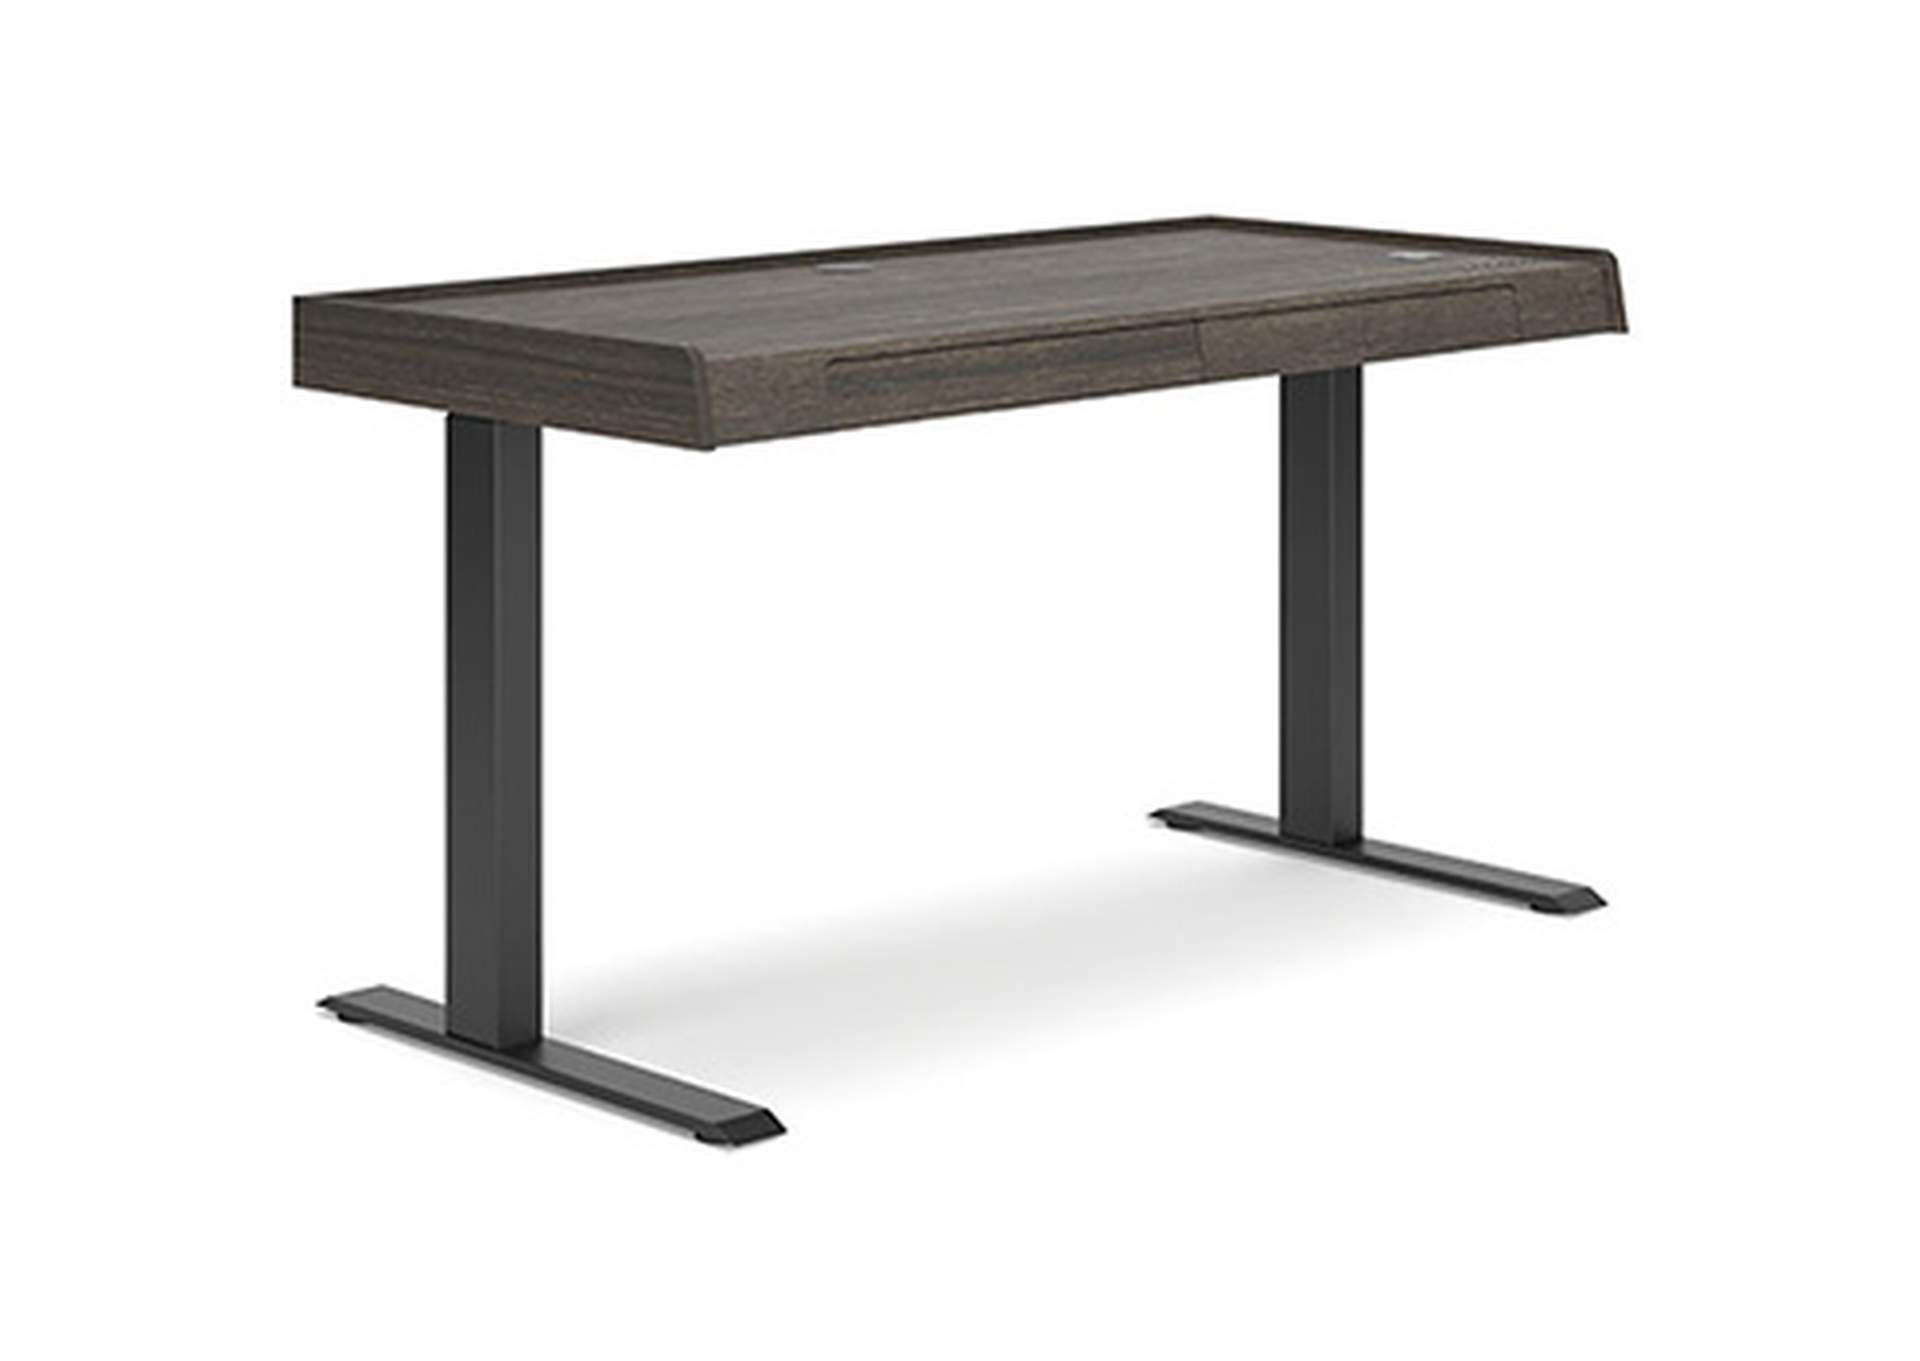 Zendex 55" Adjustable Height Desk,Signature Design By Ashley